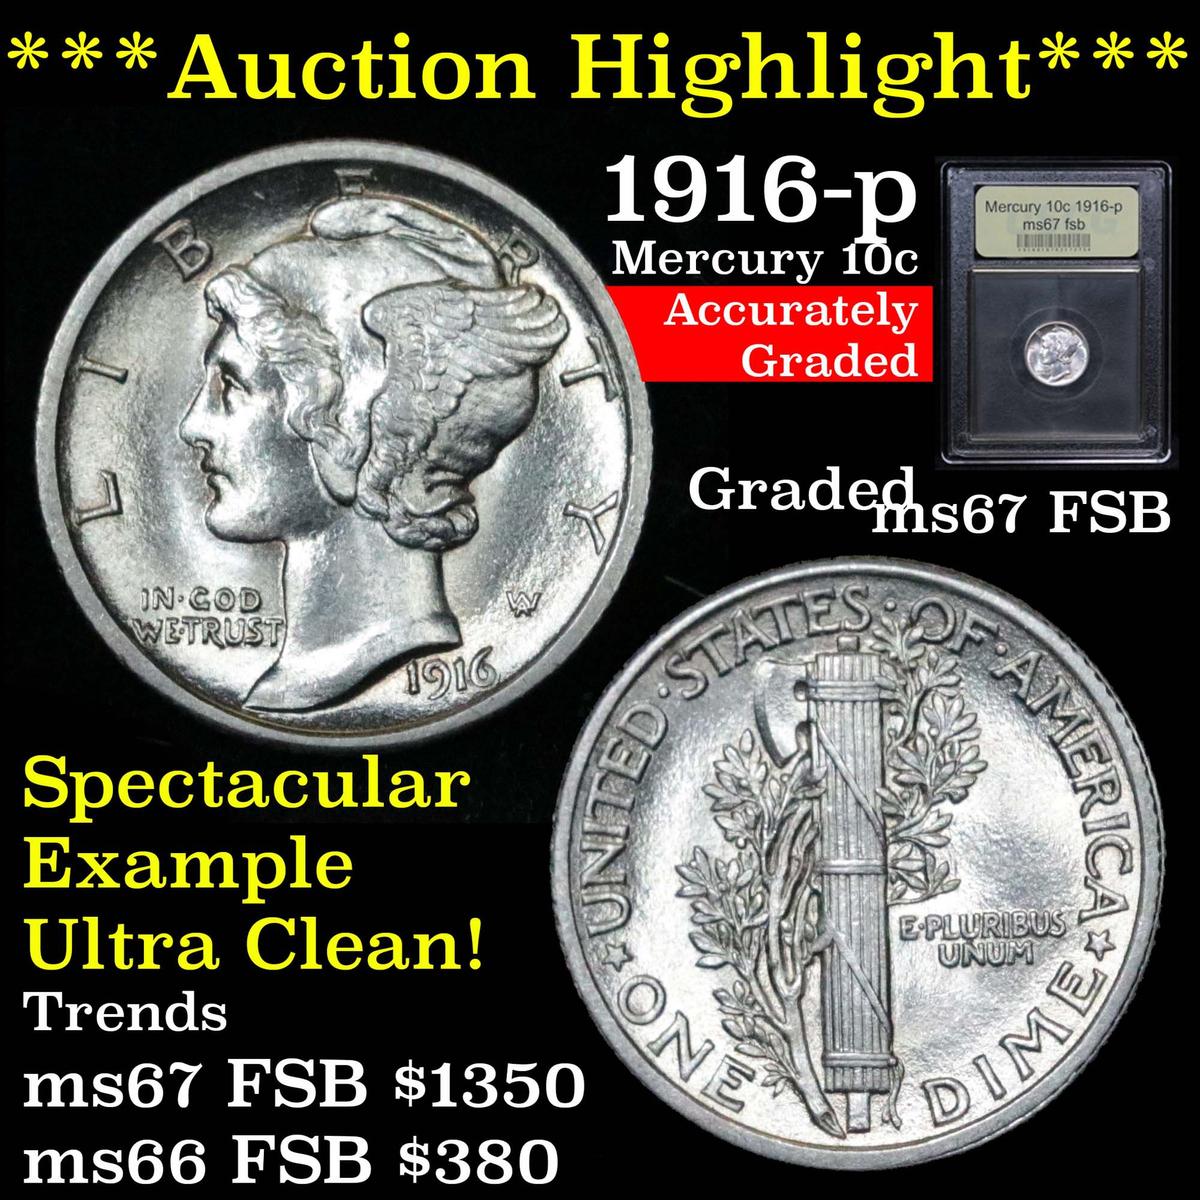 ***Auction Highlight*** 1916-p Mercury Dime 10c Graded GEM++ FSB by USCG (fc)